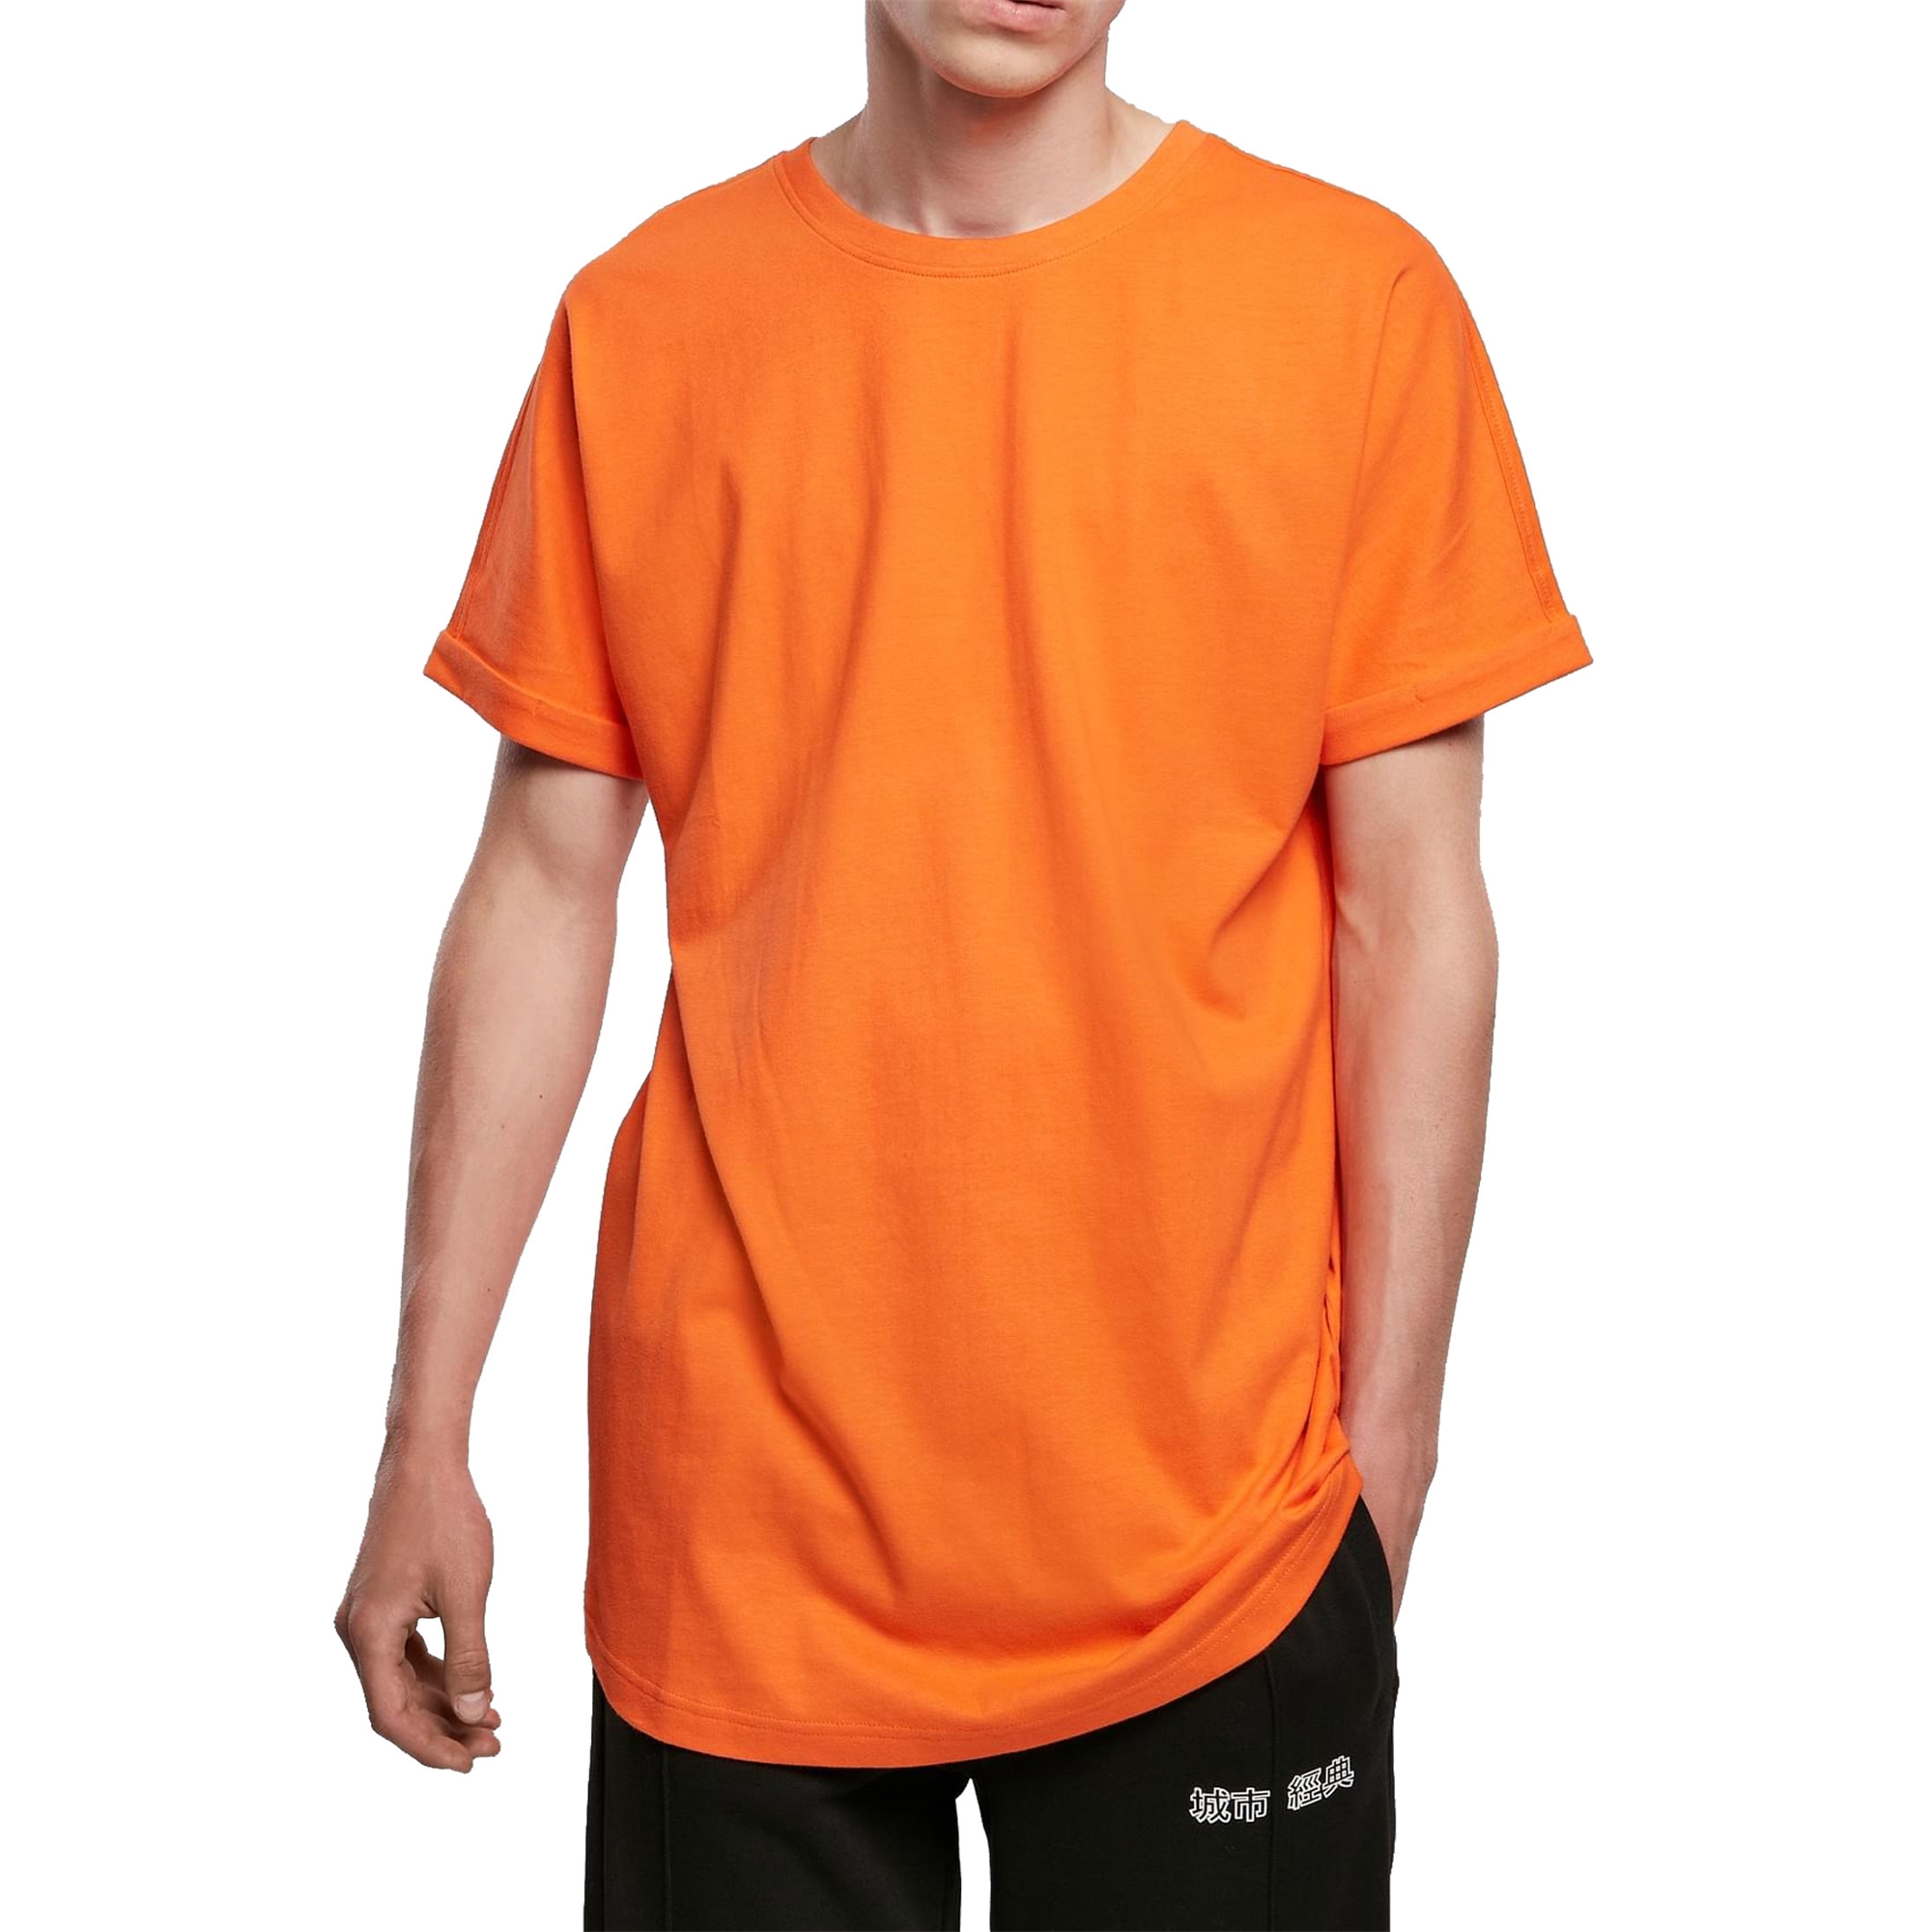 Urban Classics Tee oversize Turnup Shirt Herren lang Long T-Shirt extra eBay Shaped 